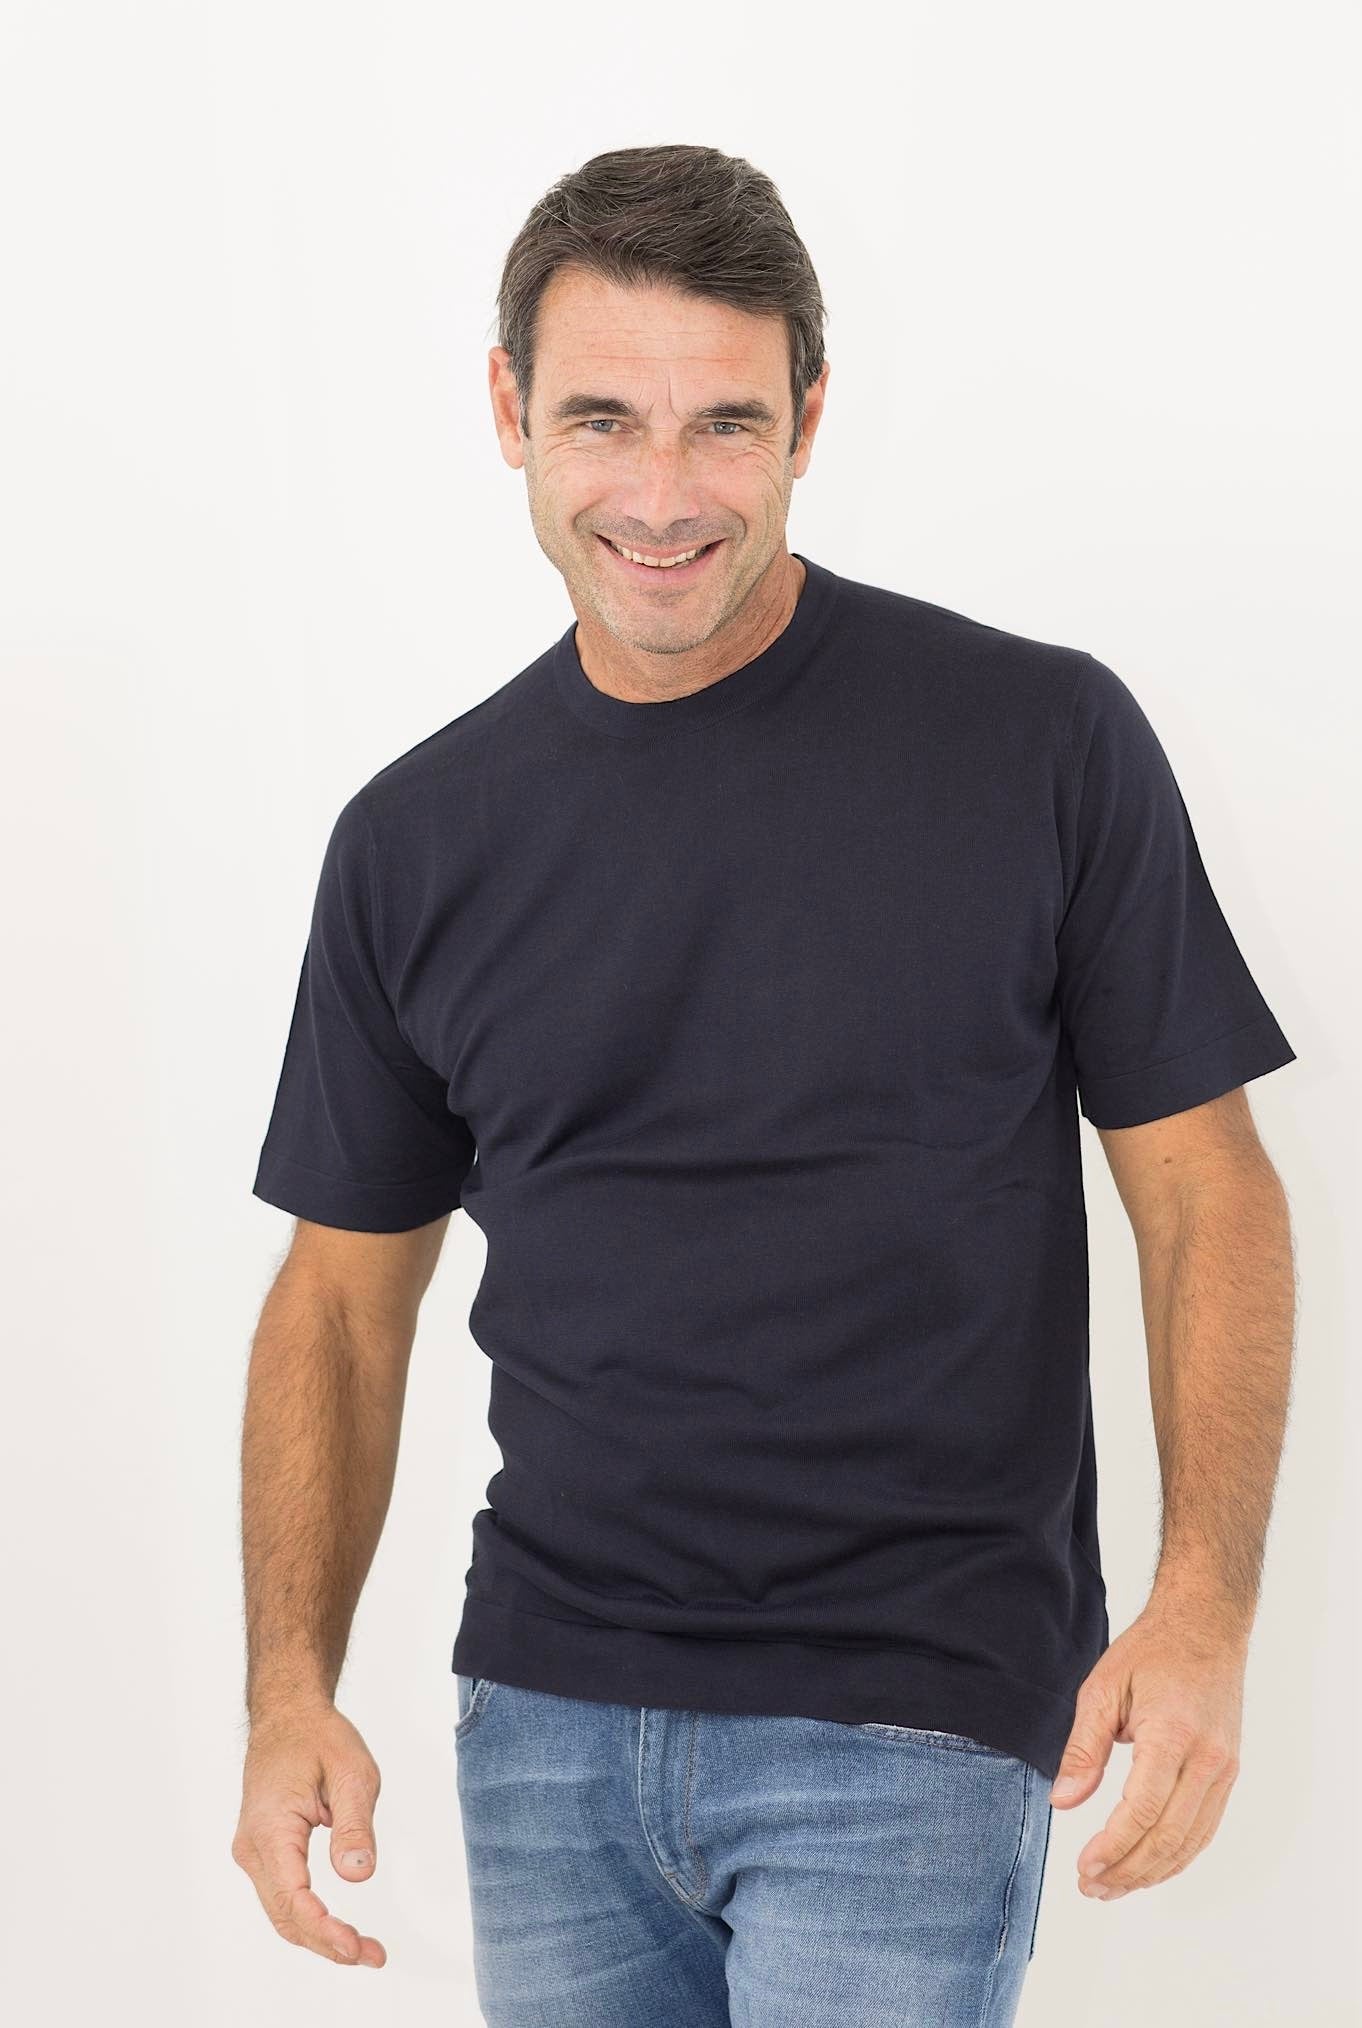 JOHN SMEDLEY T-Shirt mod. Lorca Sea Island Cotton Blu Navy